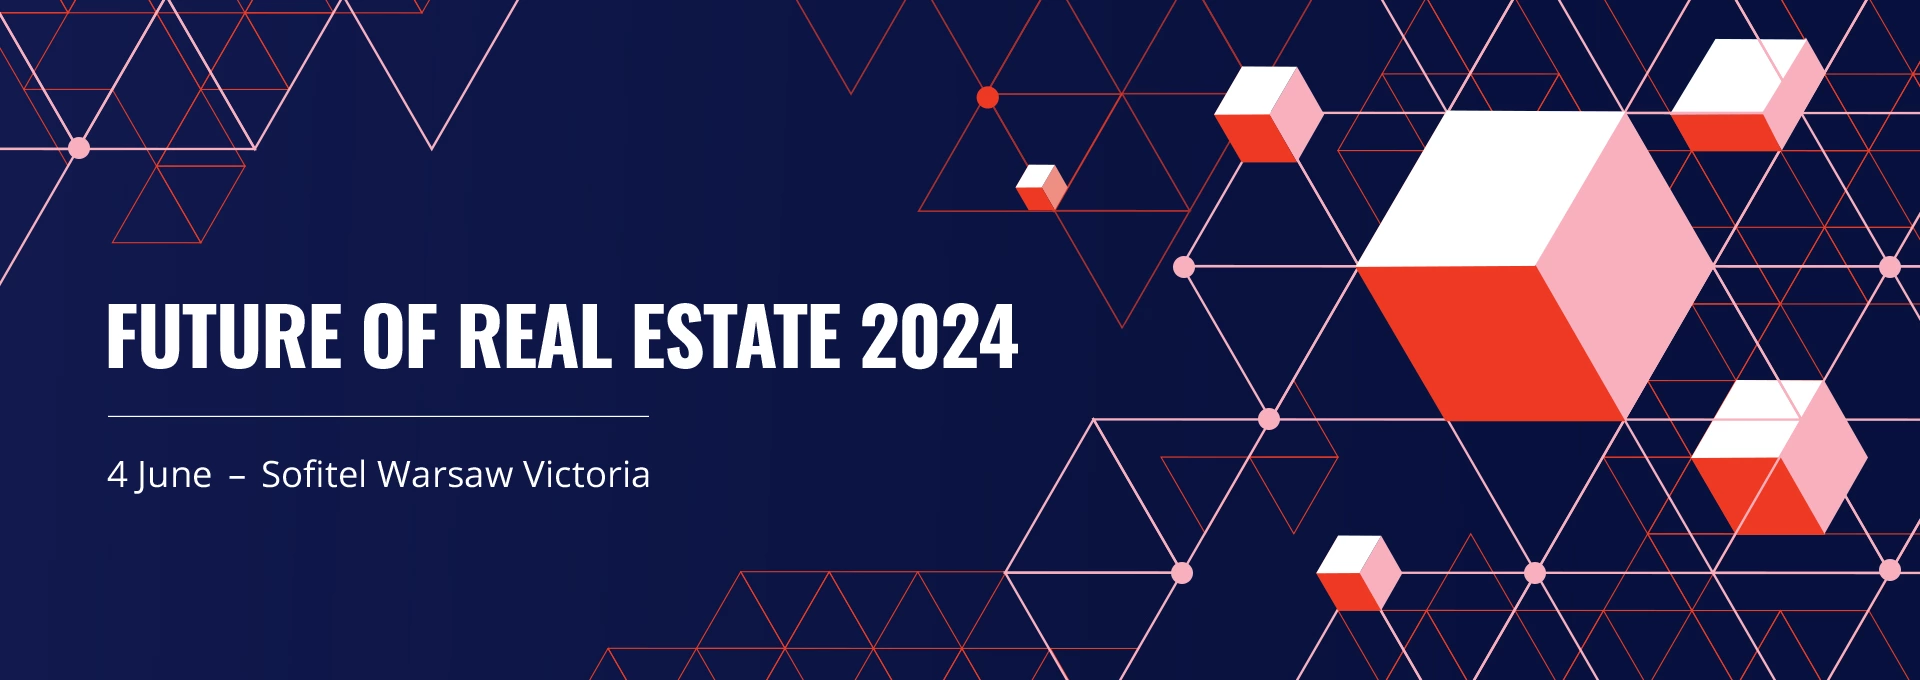 Future of Real Estate 2024 - Warsaw, Poland